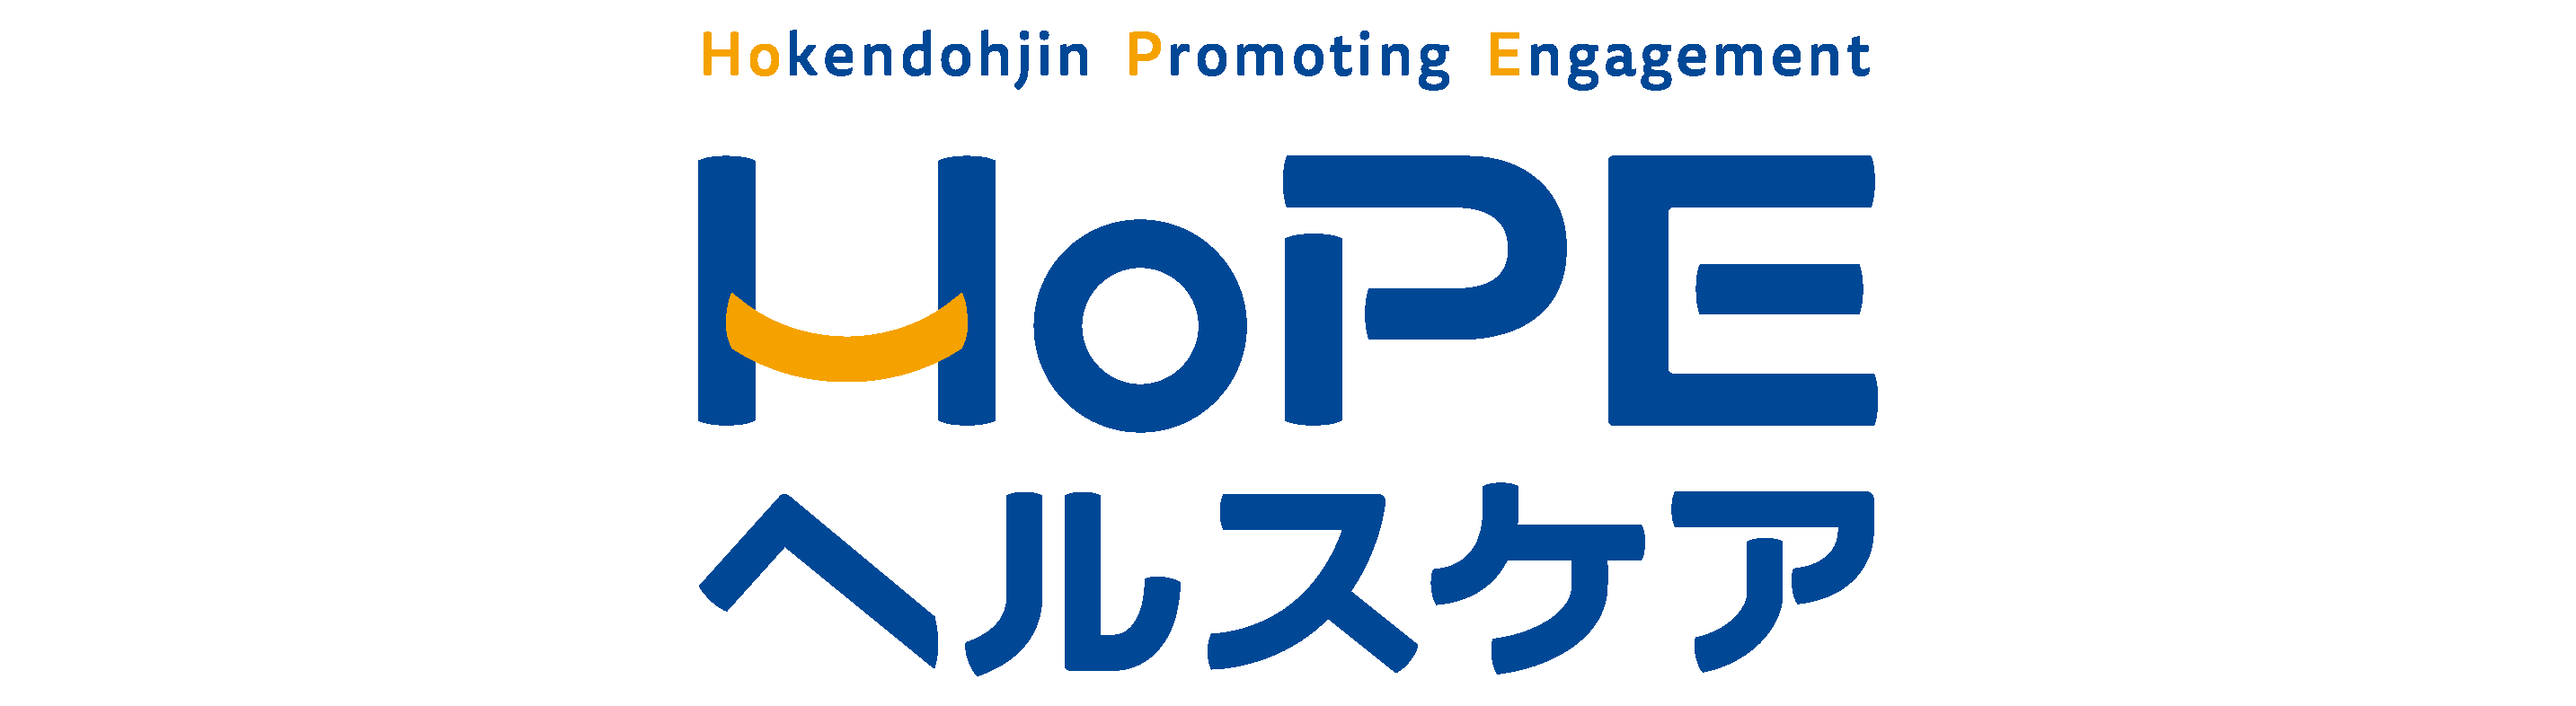 HOPEヘルスケア透過ロゴ